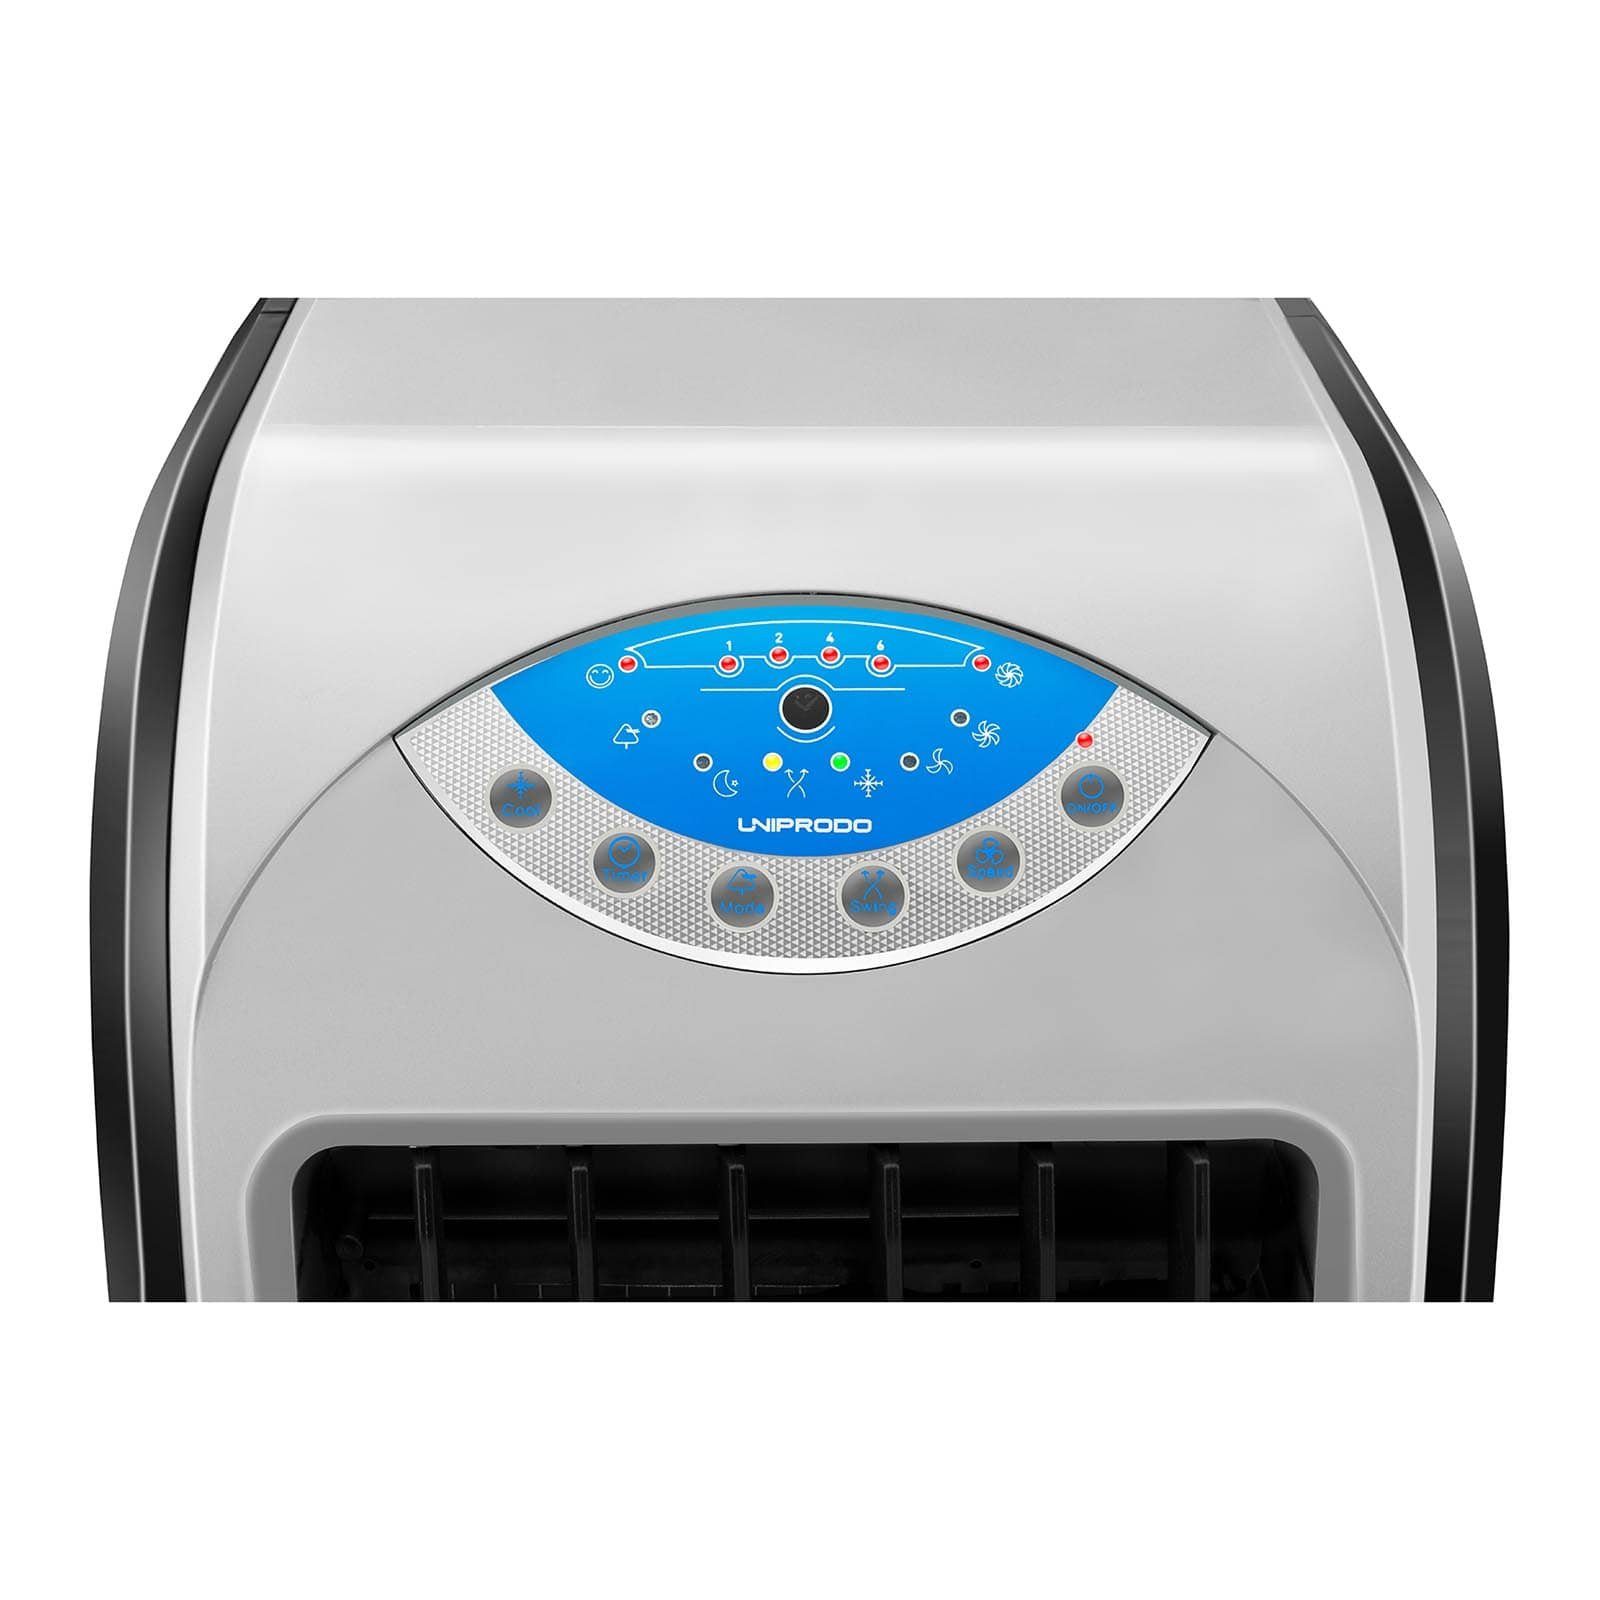 Uniprodo Ventilatorkombigerät - Luftkühler 4 - Heizfunktion mobil 1 in Wassertank L mit 6